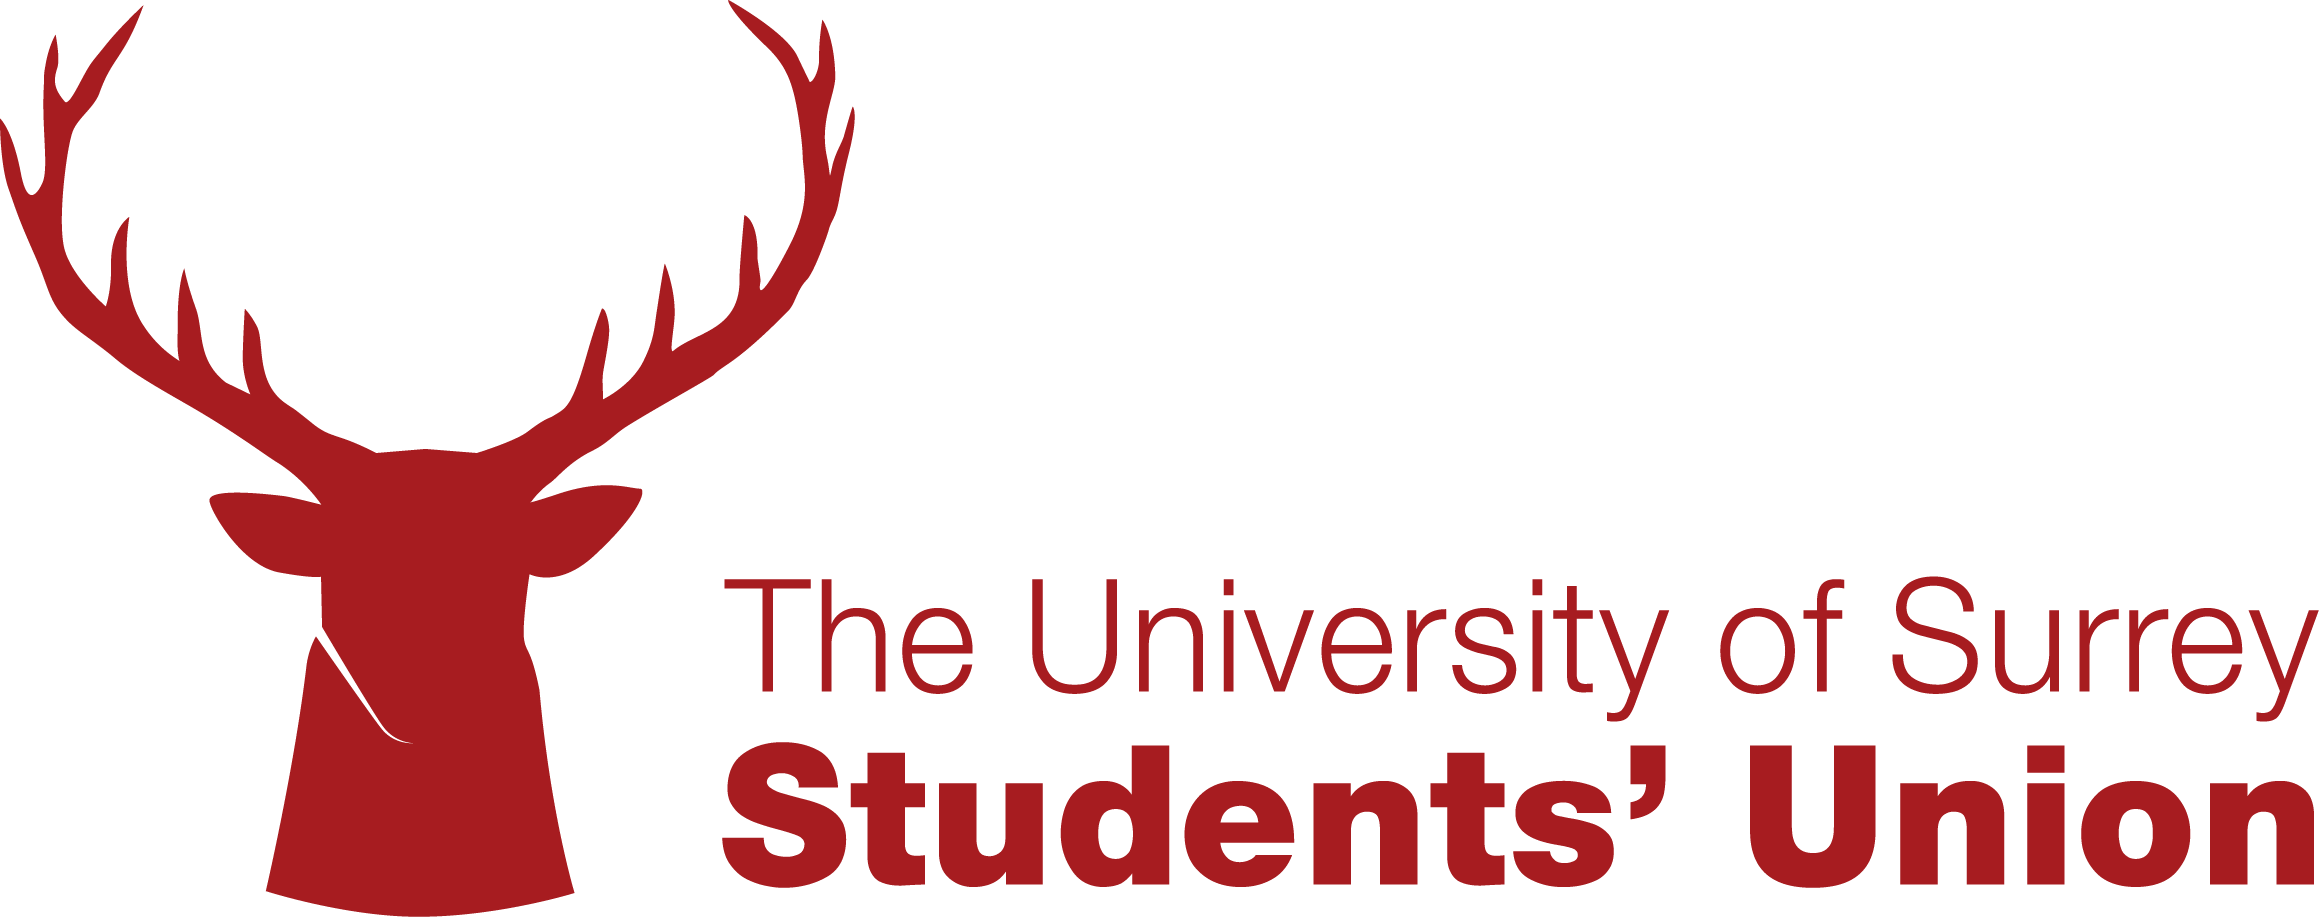 University of surrey students union jobs